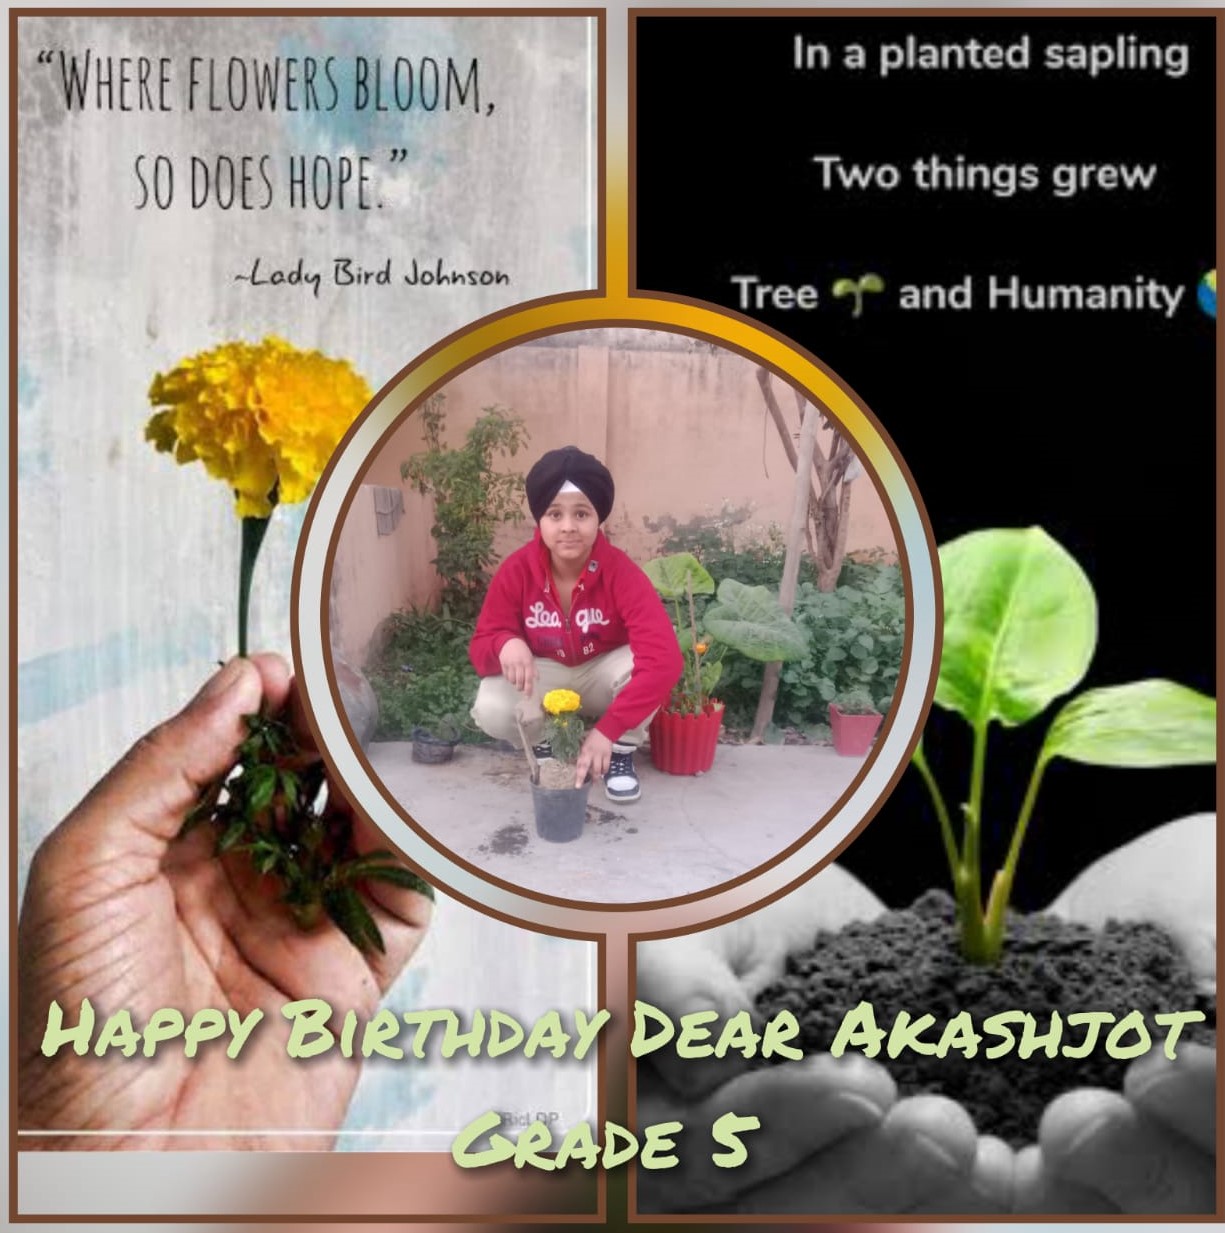 Mission “One Life One Plant” Akashjot Singh of Grade-5 Planted a Sapling on his birthday (GEMS Public School)